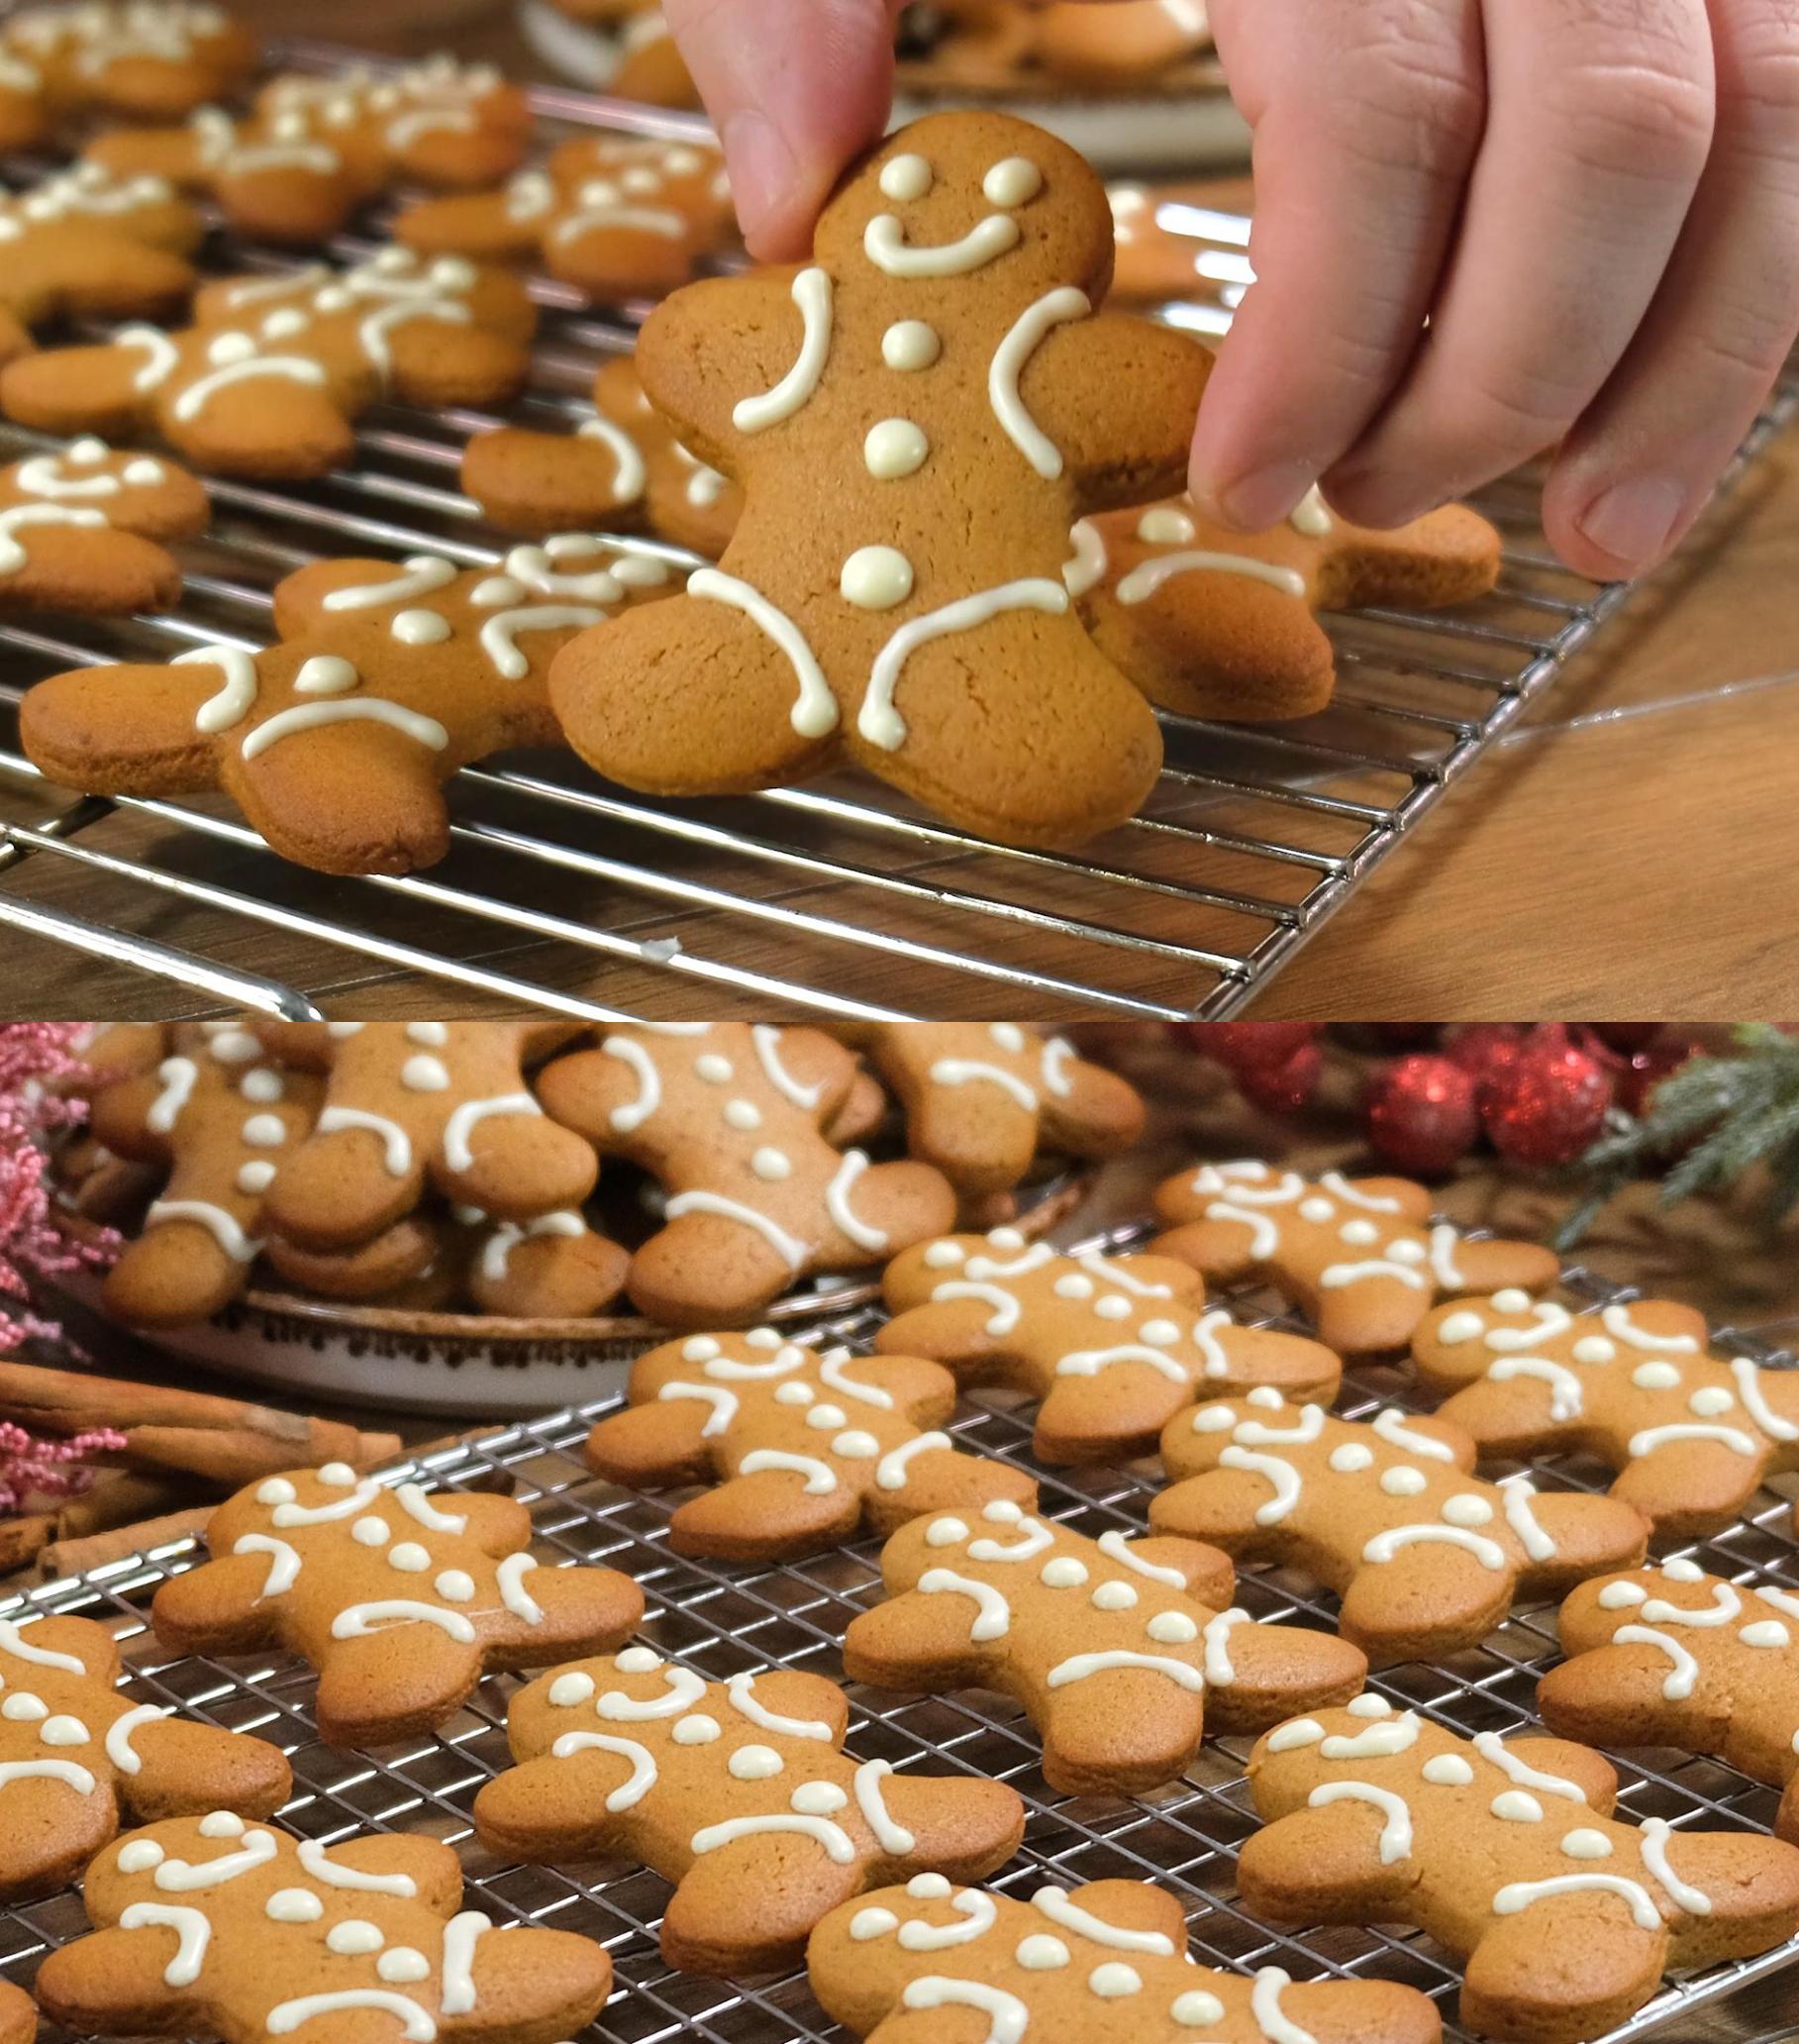 Gingerbread μπισκότα χωρίς ζάχαρη του Παναγιώτη Παπαδάκη